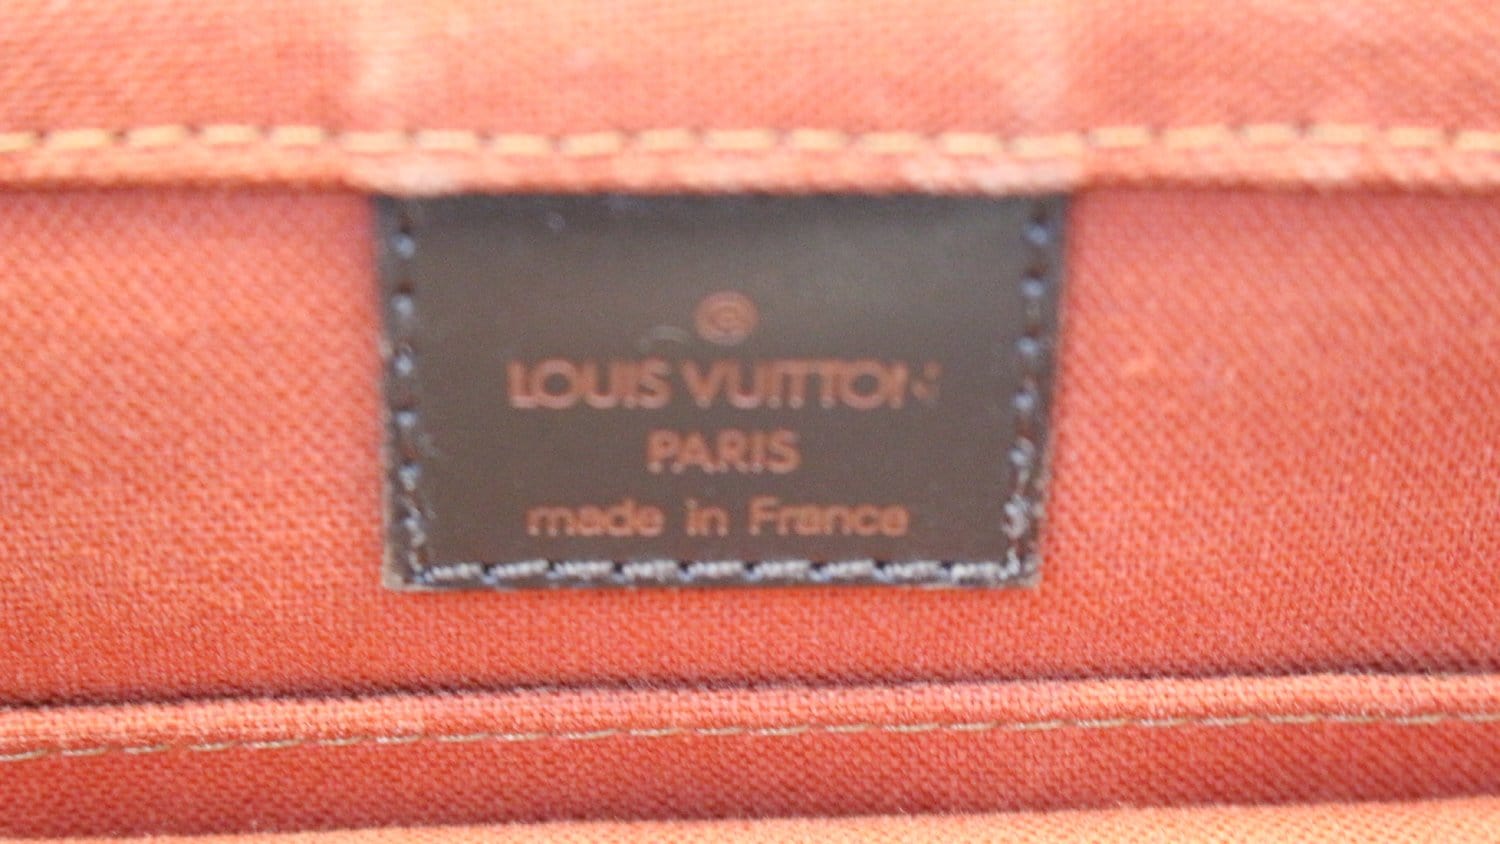 Sold Louis Vuitton Damier Bastille Messenger Bag 2004